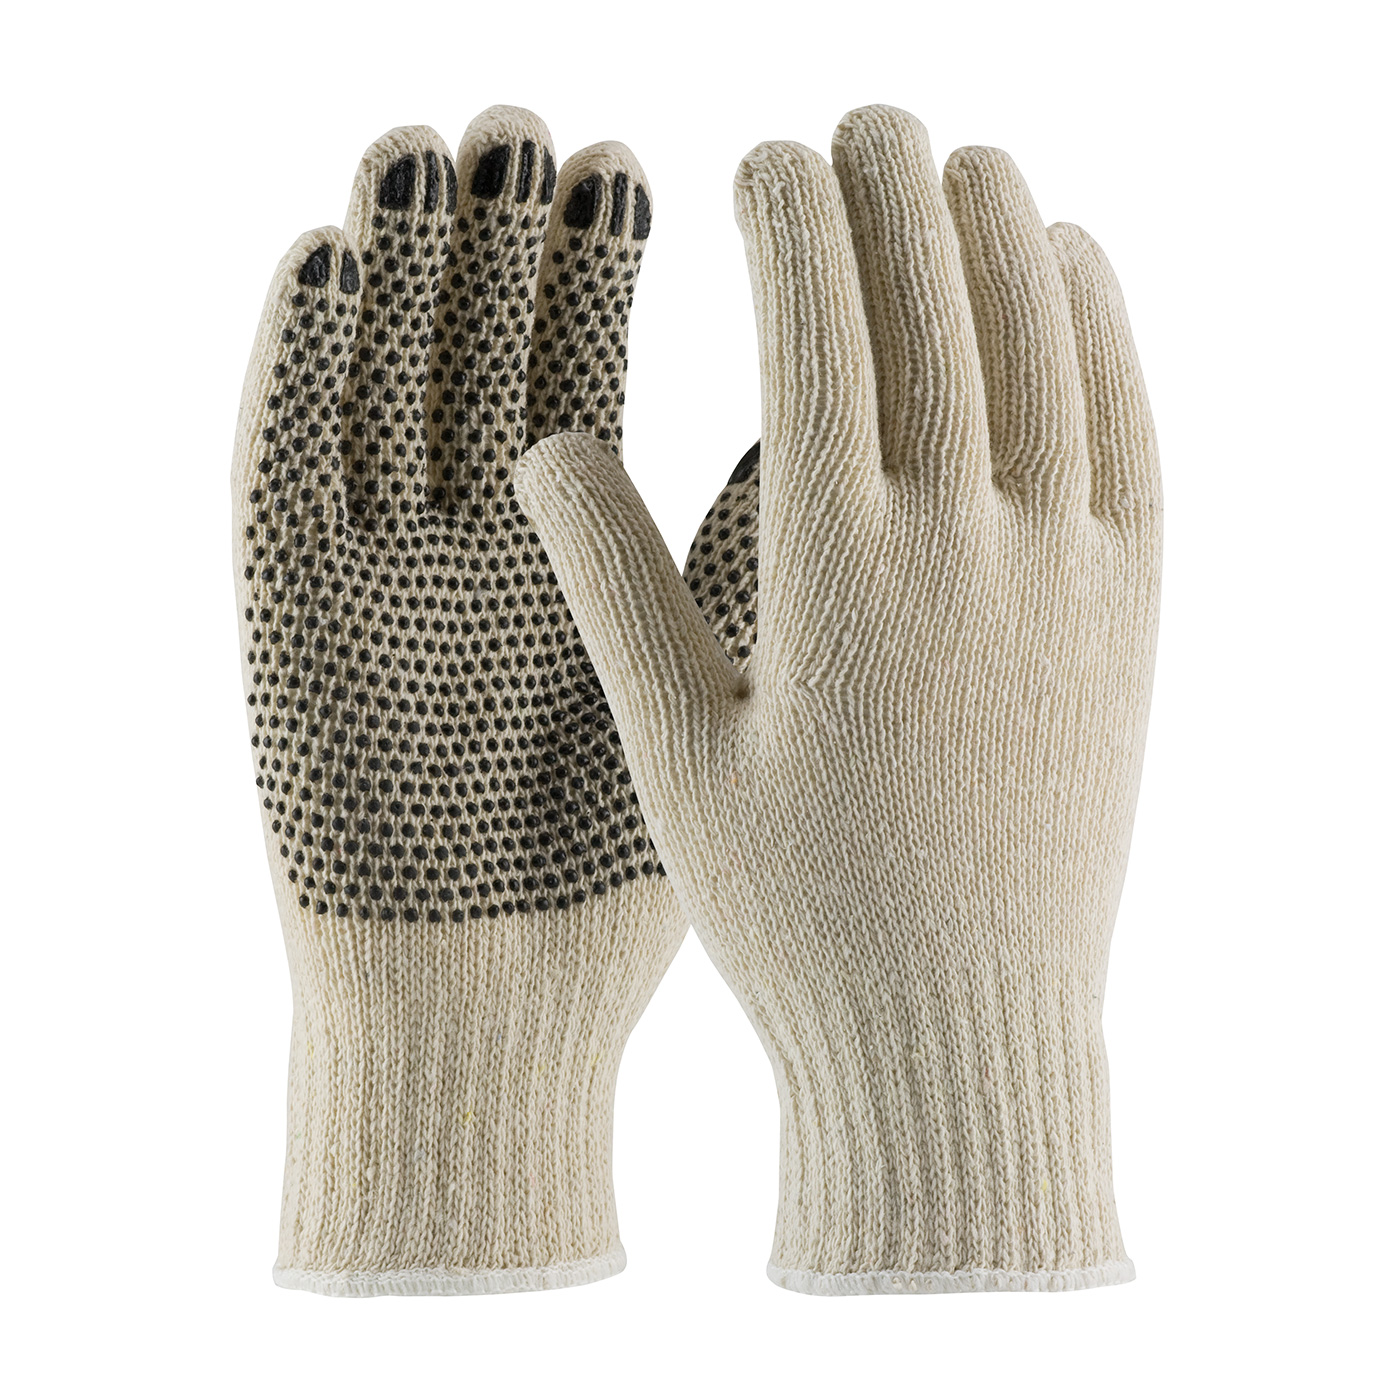 PIP® Seamless Knit Cotton / Polyester Glove with PVC Dot Grip - Regular Weight #36-110PD